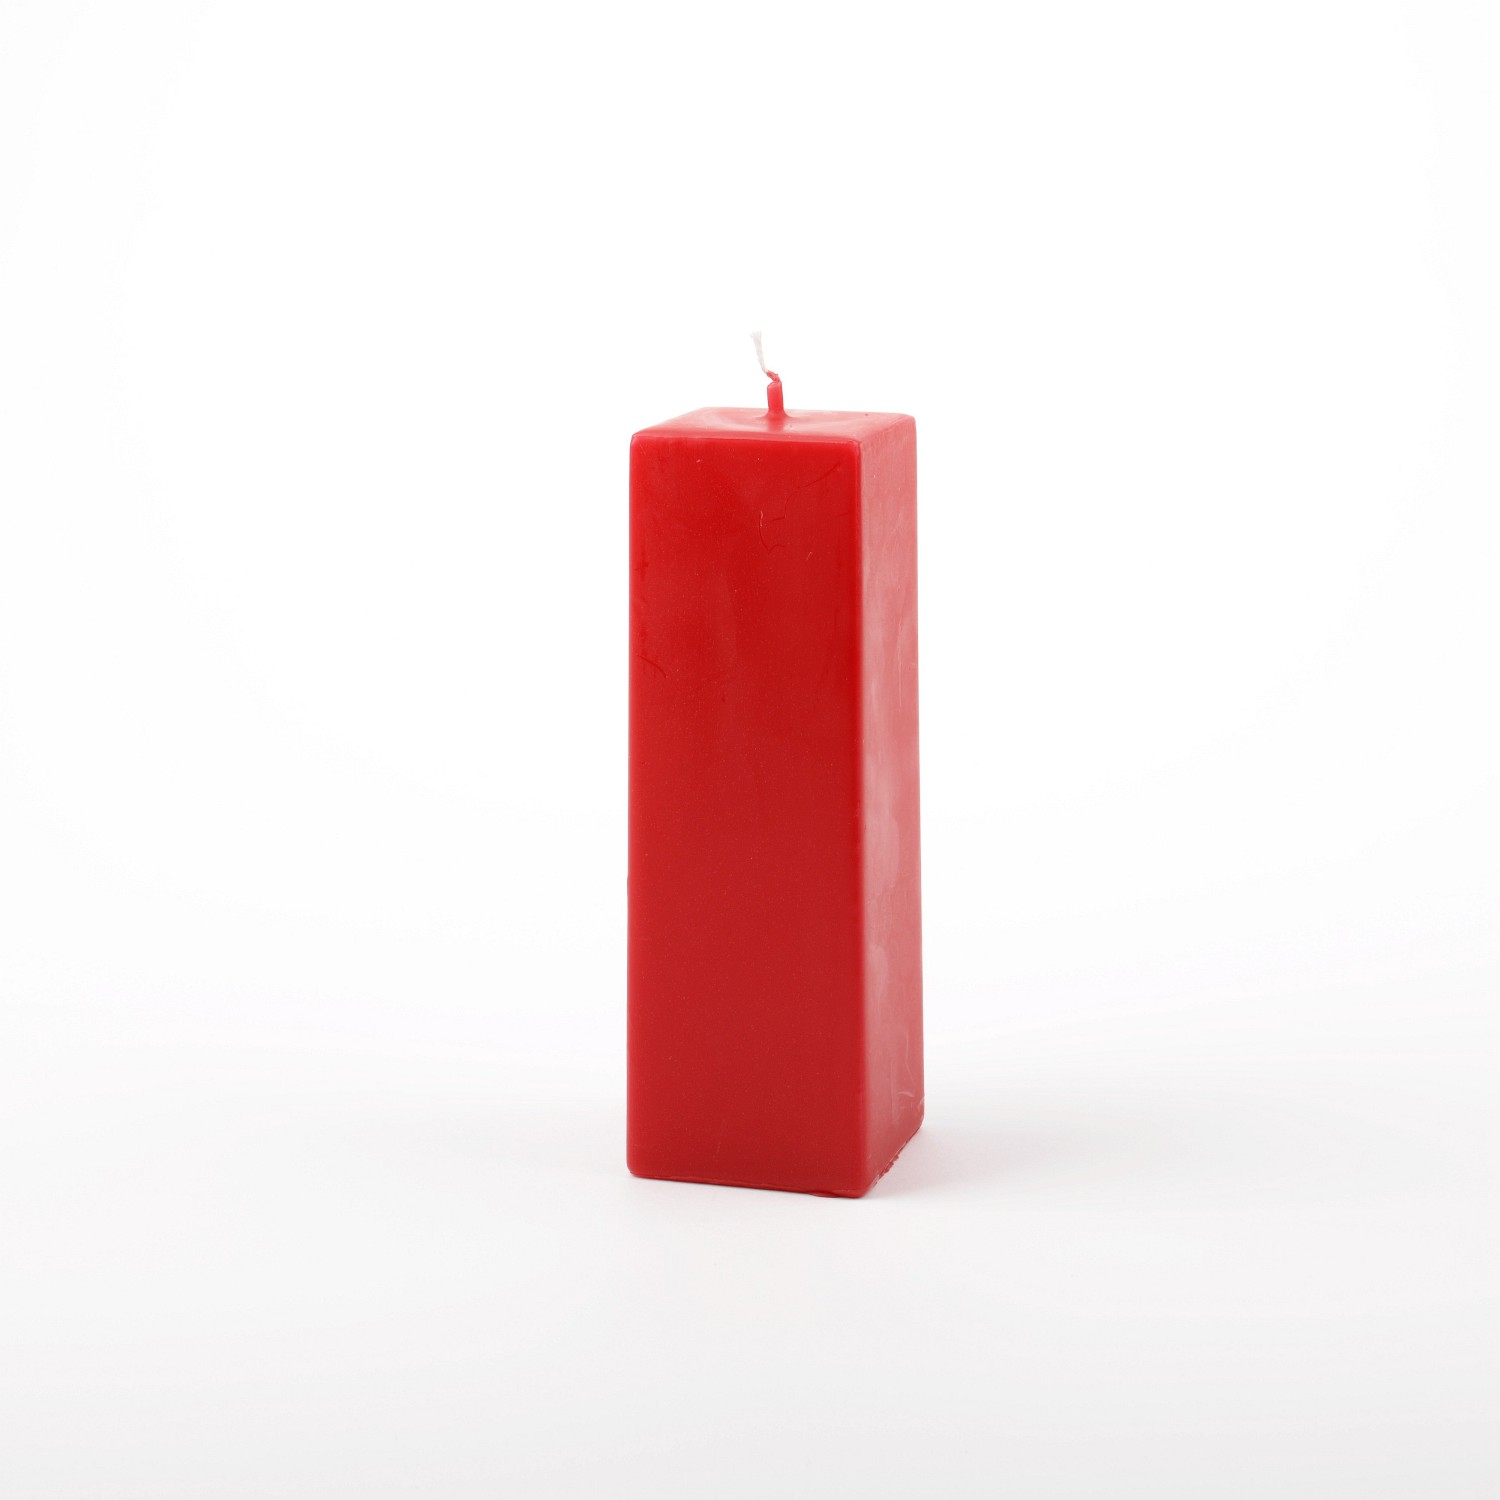 Viereck-Kerze "Glatt" (Höhe 14,5 cm)